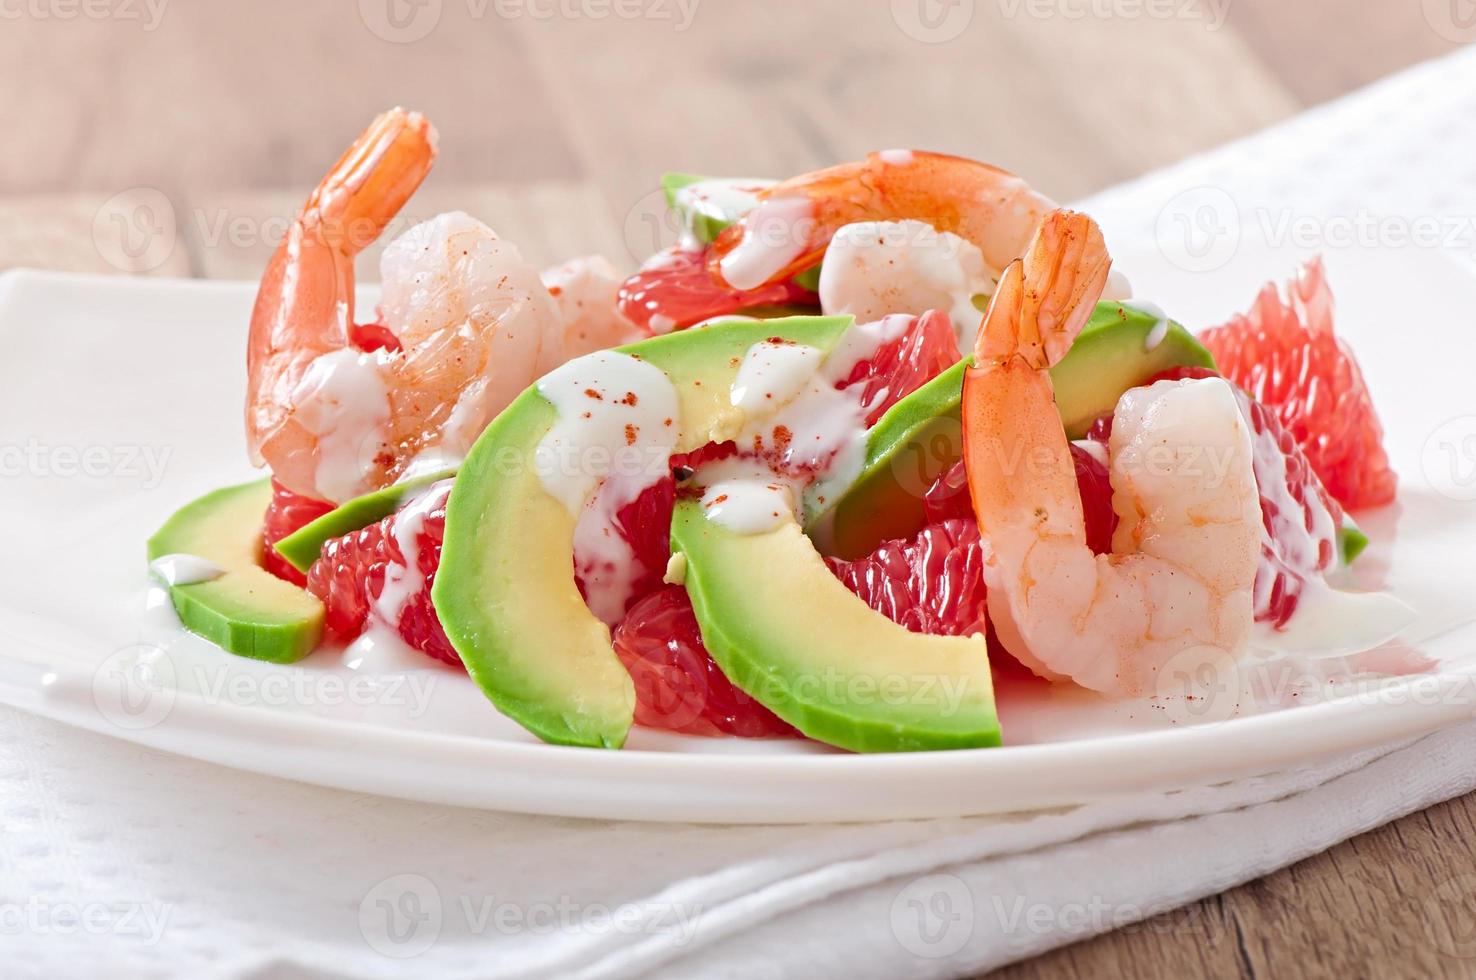 California salad - a mix of avocado, grapefruit and shrimp, seasoned with cayenne pepper yogurt photo